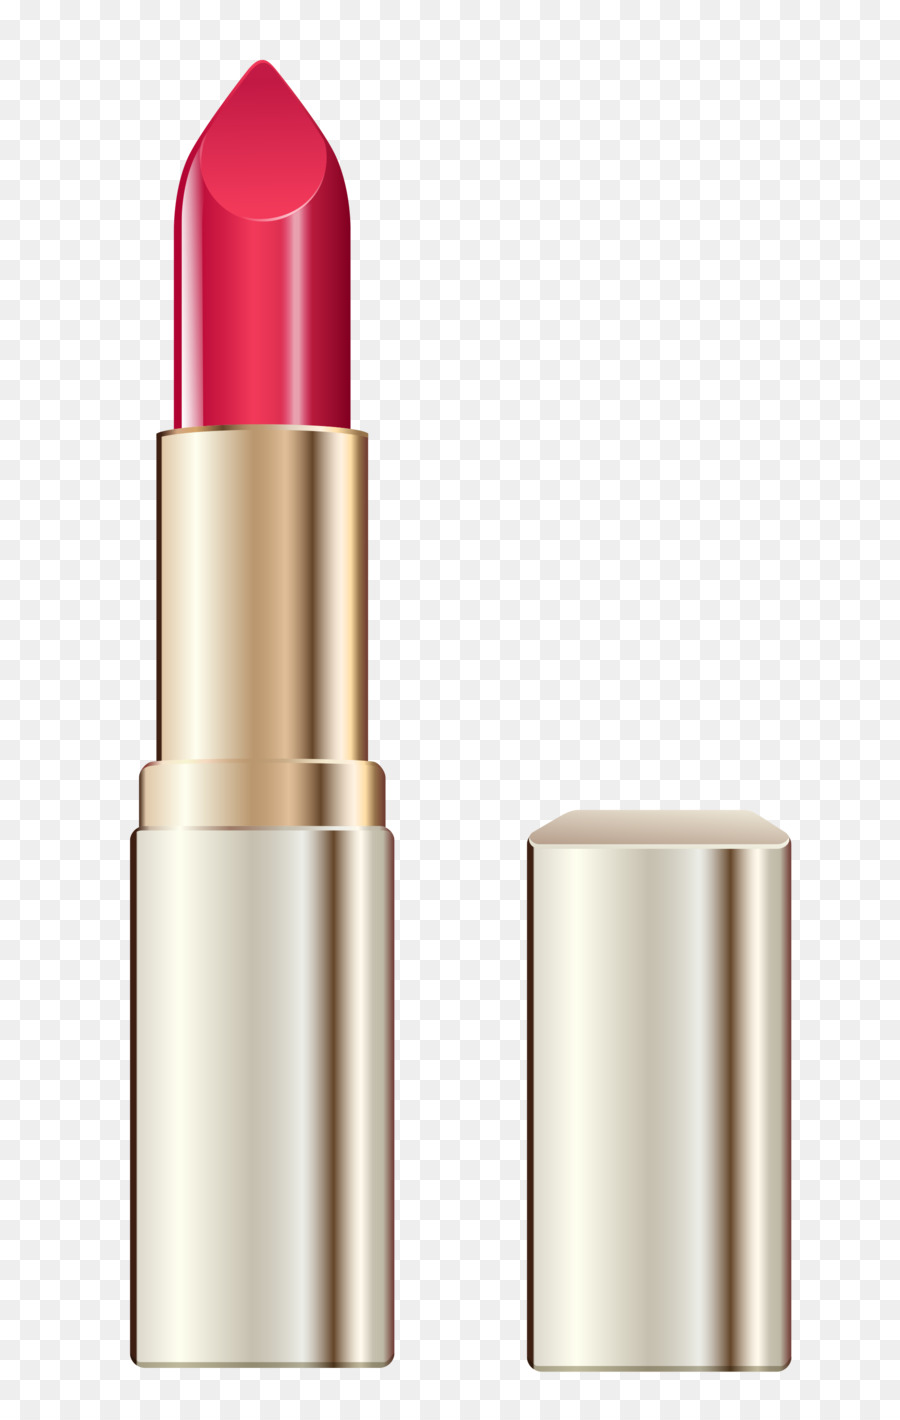 Lipstick Cosmetics Clip art - Lipstick PNG Free Download png download - 1984*3088 - Free Transparent Lipstick png Download.